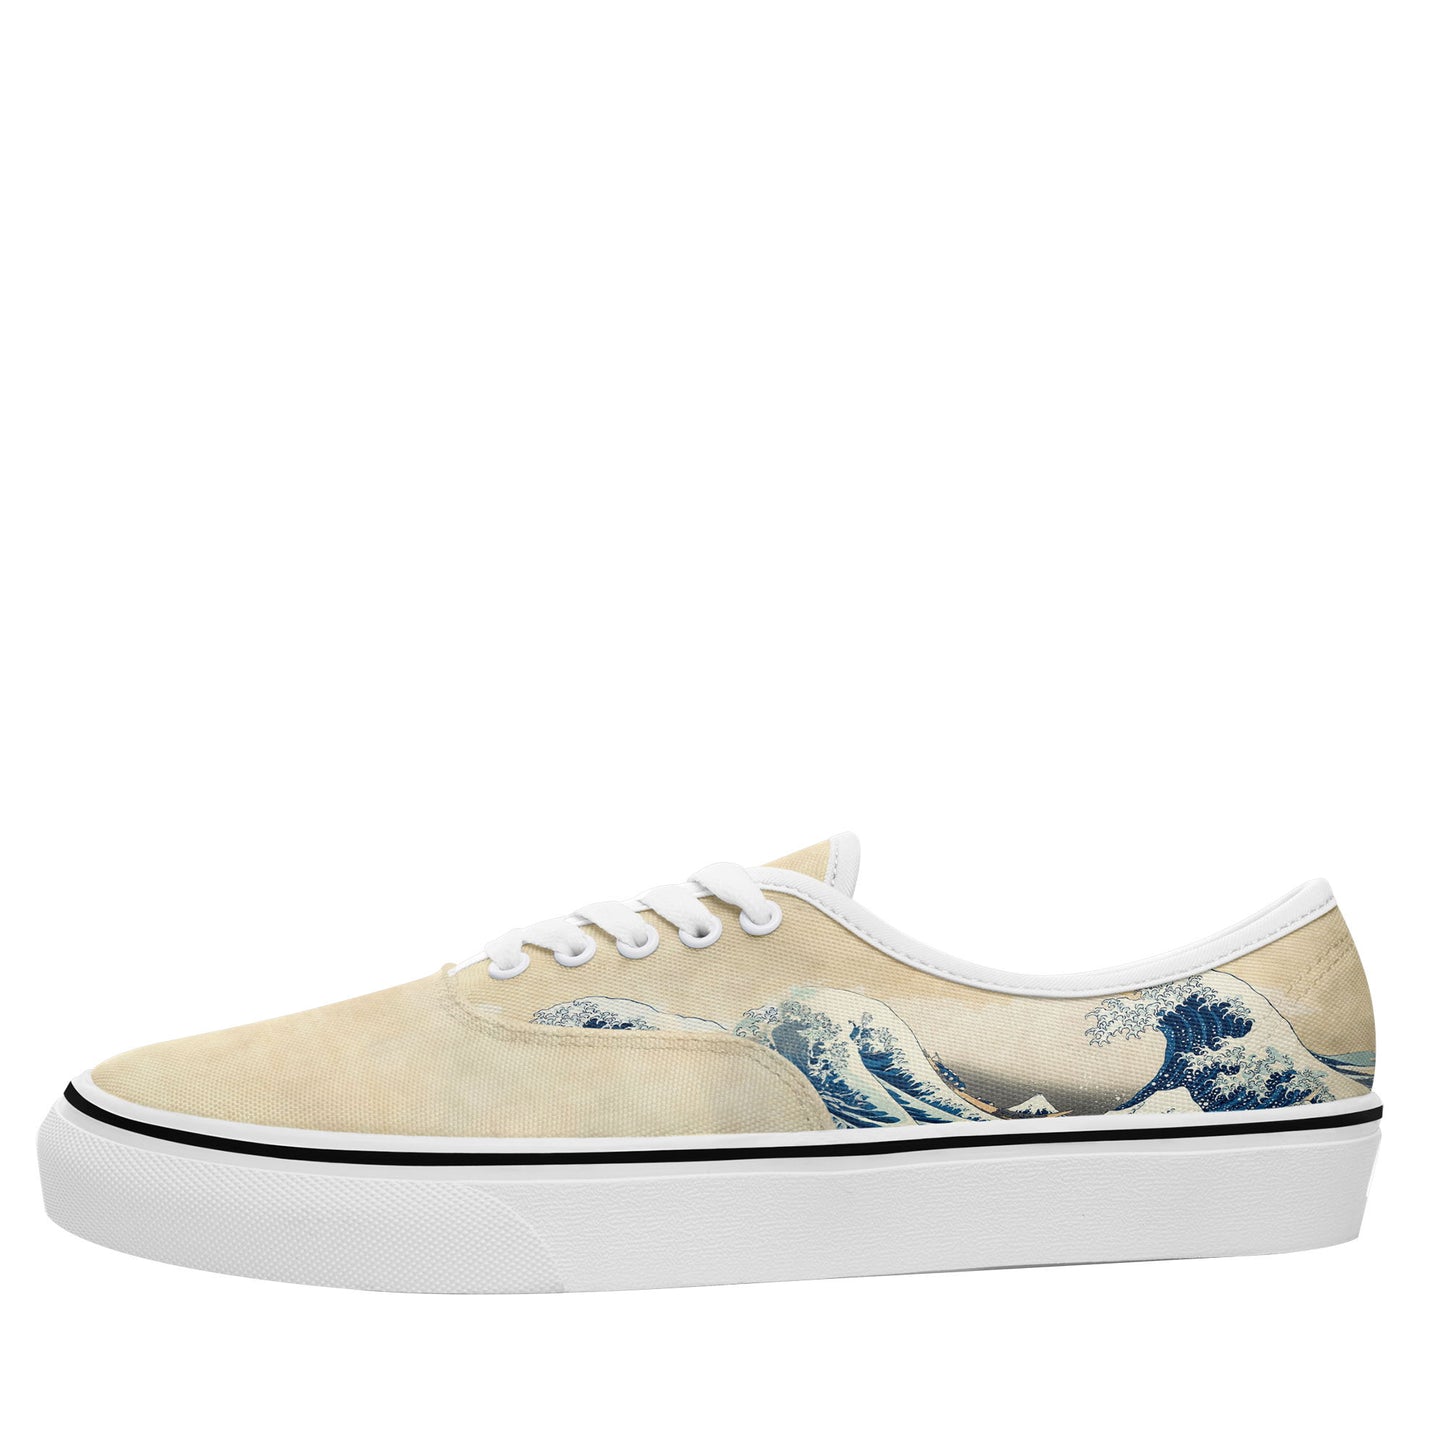 personalized customization print on demand casual shoes 7213 japanese retro art style ukiyo-e katsushika hokusai's the great wave off kanagawa Sneakers white soles 2